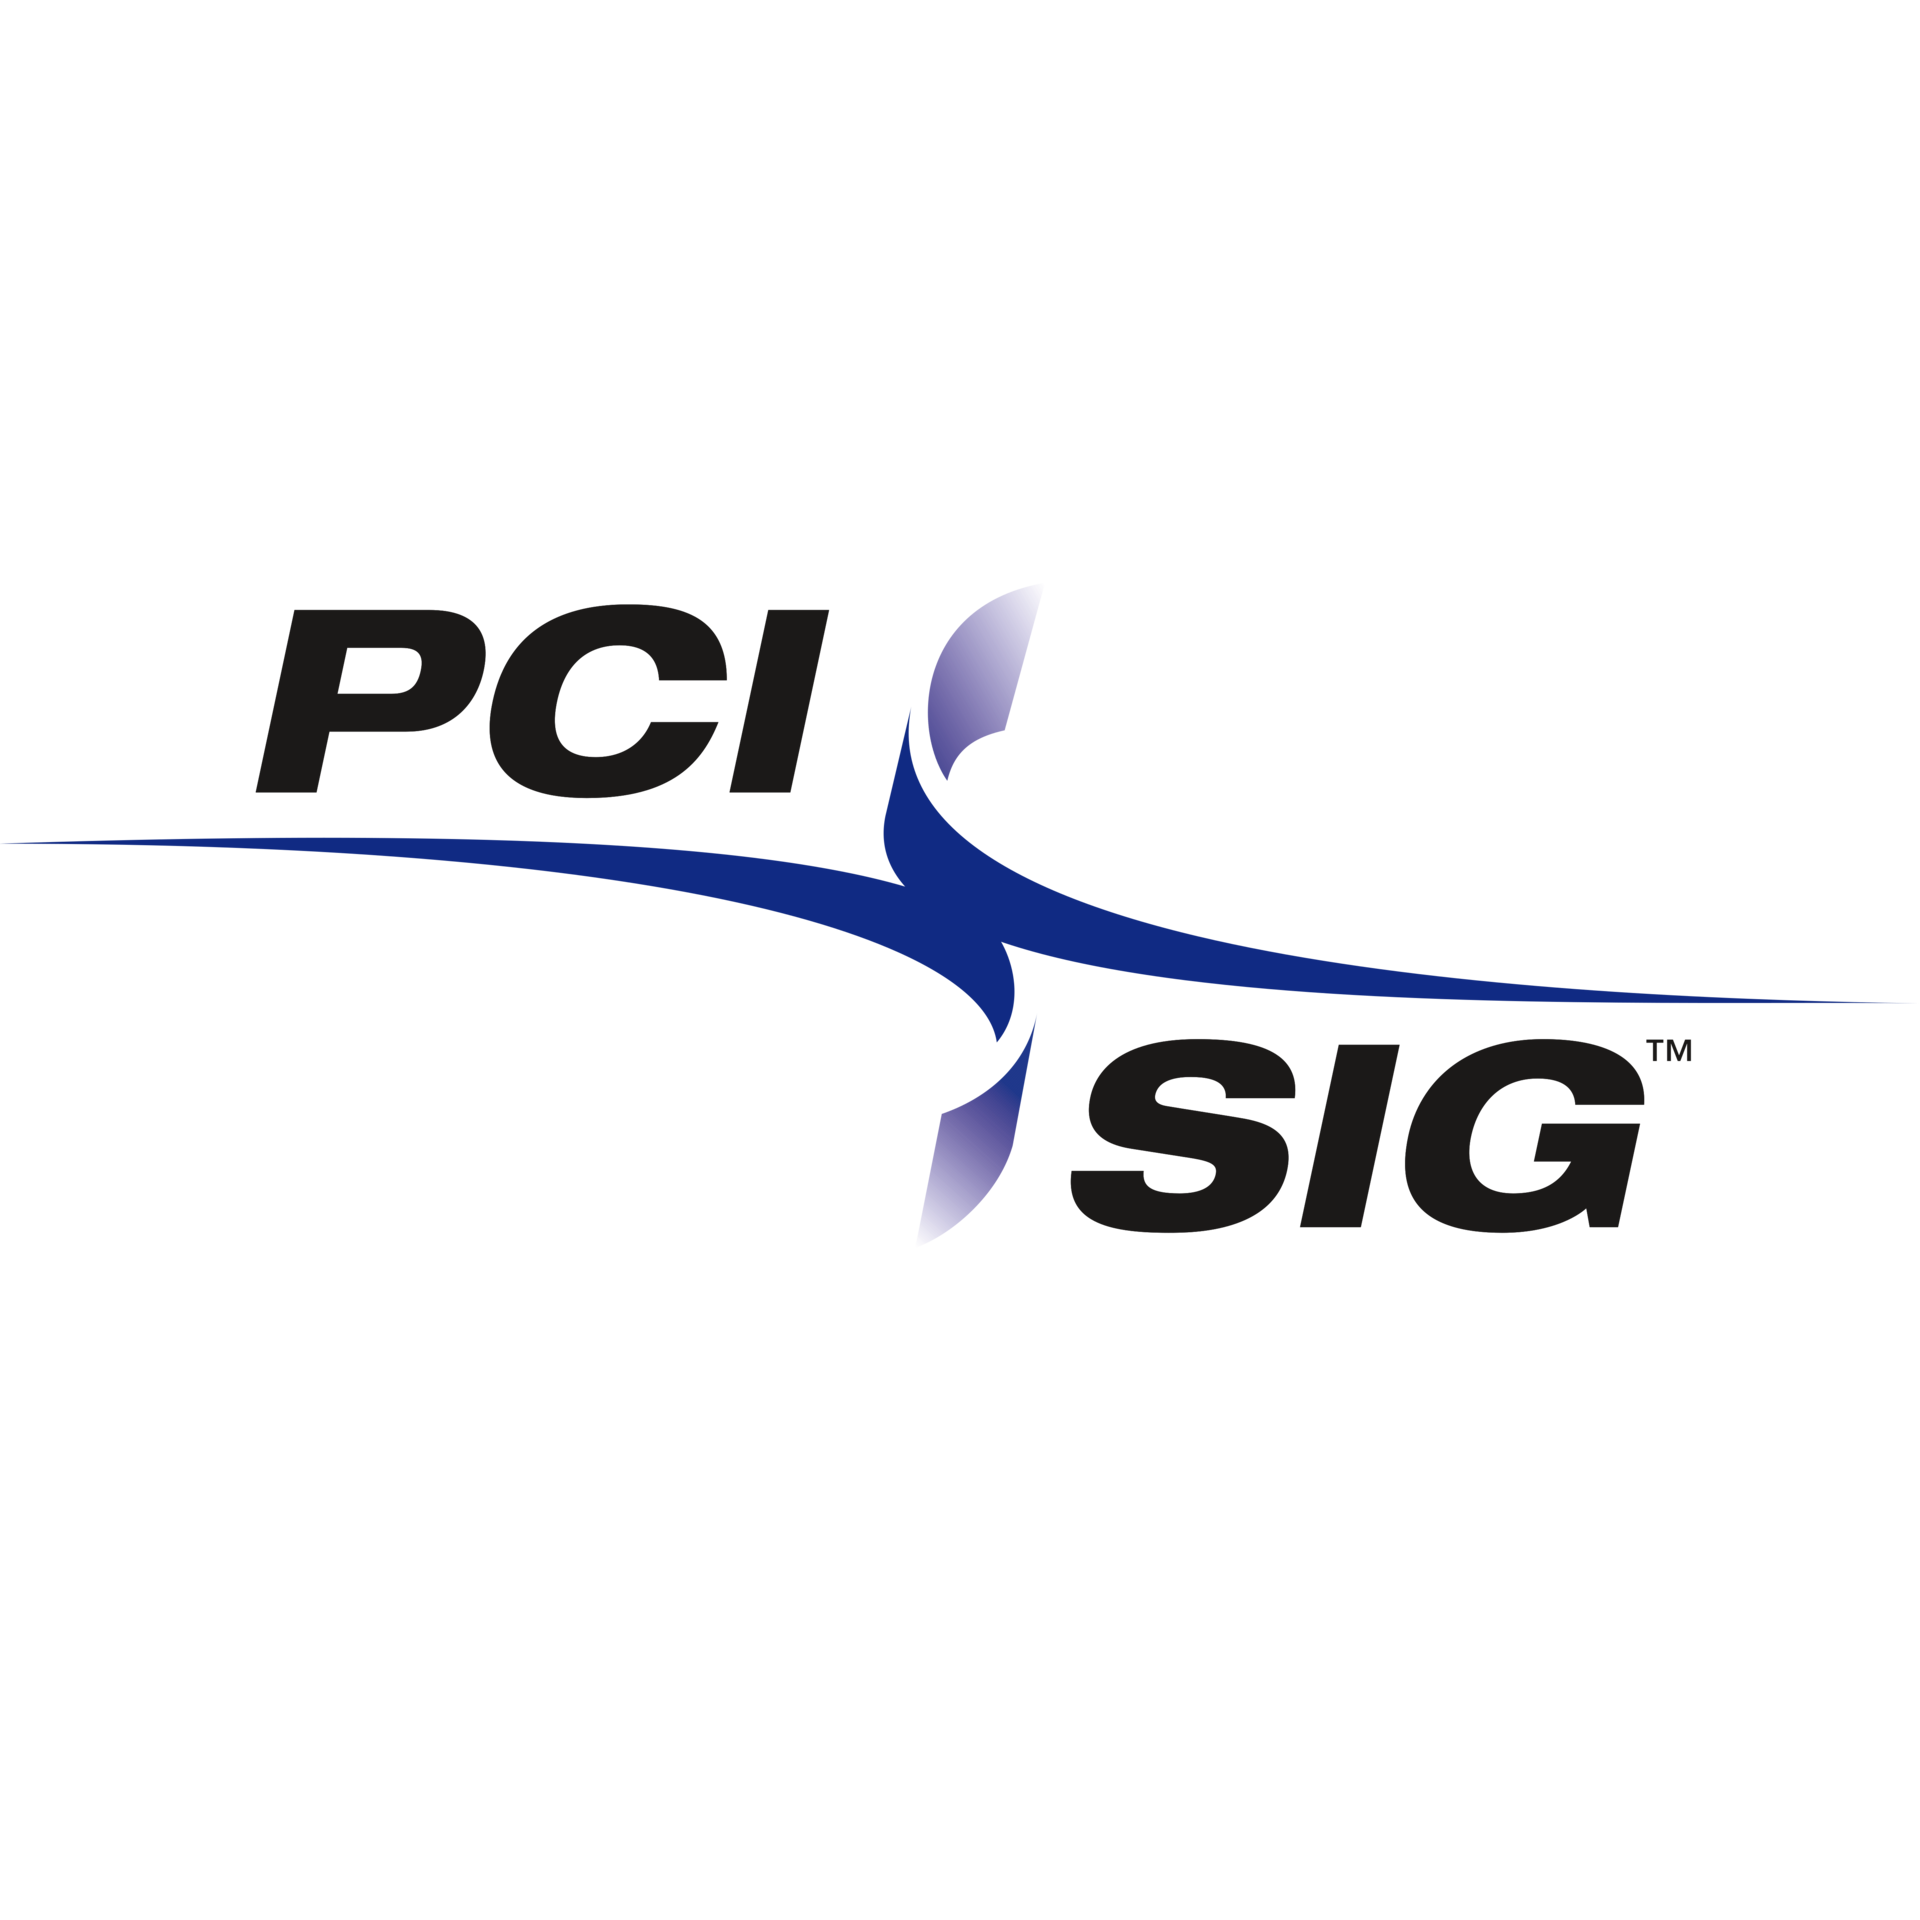 Logo der PCI Special Interest Group PCI-SIG®